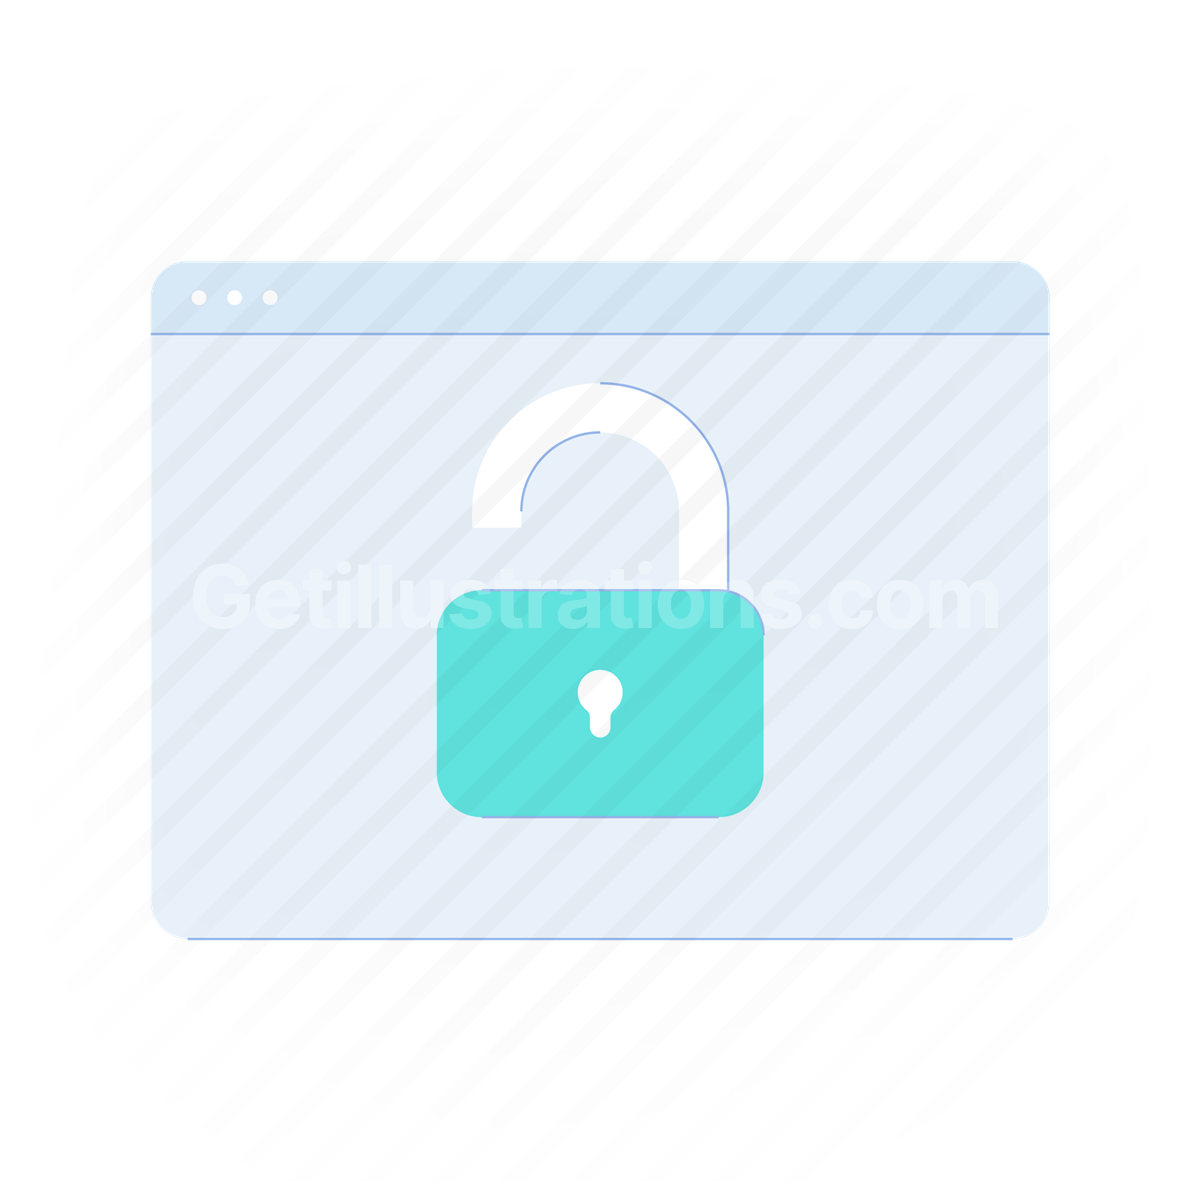 unlock browser, unlock, lock, privacy, security, browser, webpage